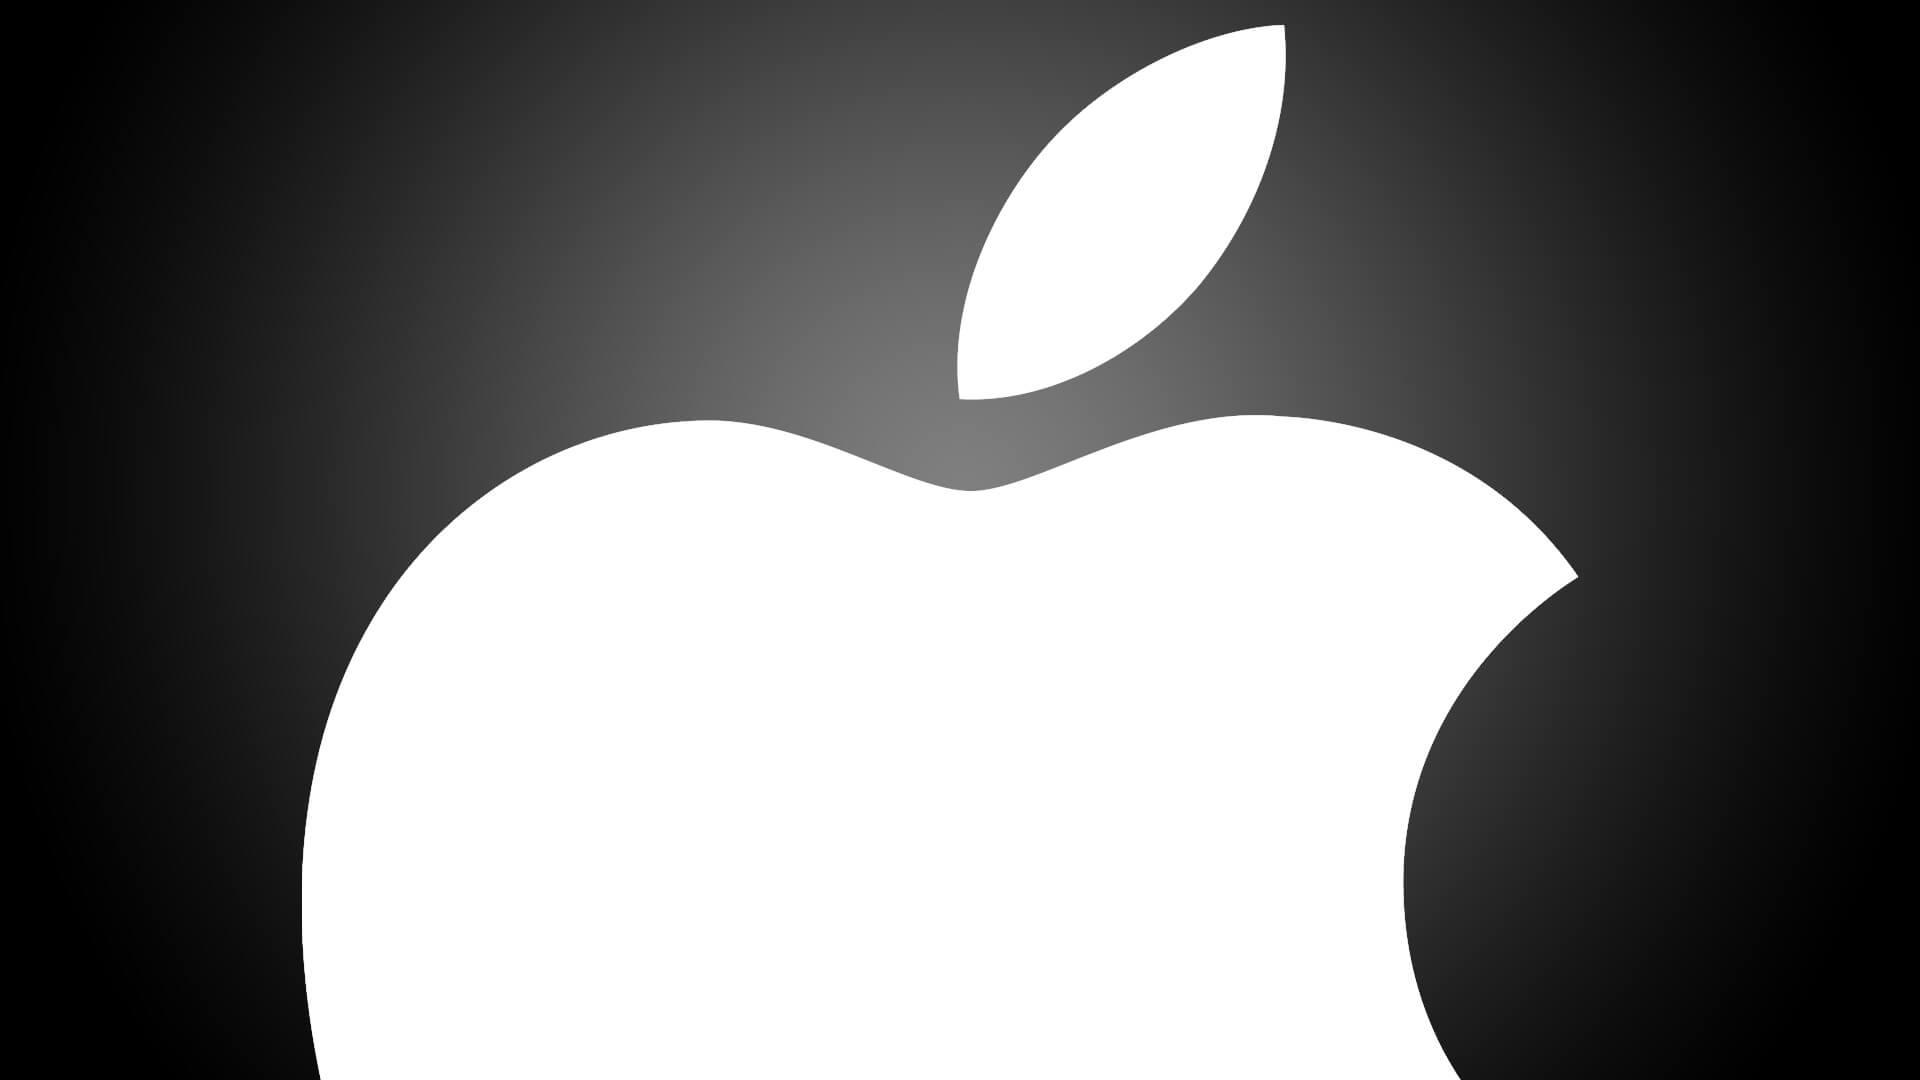 WebCrawler Logo - Apple Confirms Their Web Crawler: Applebot - Search Engine Land